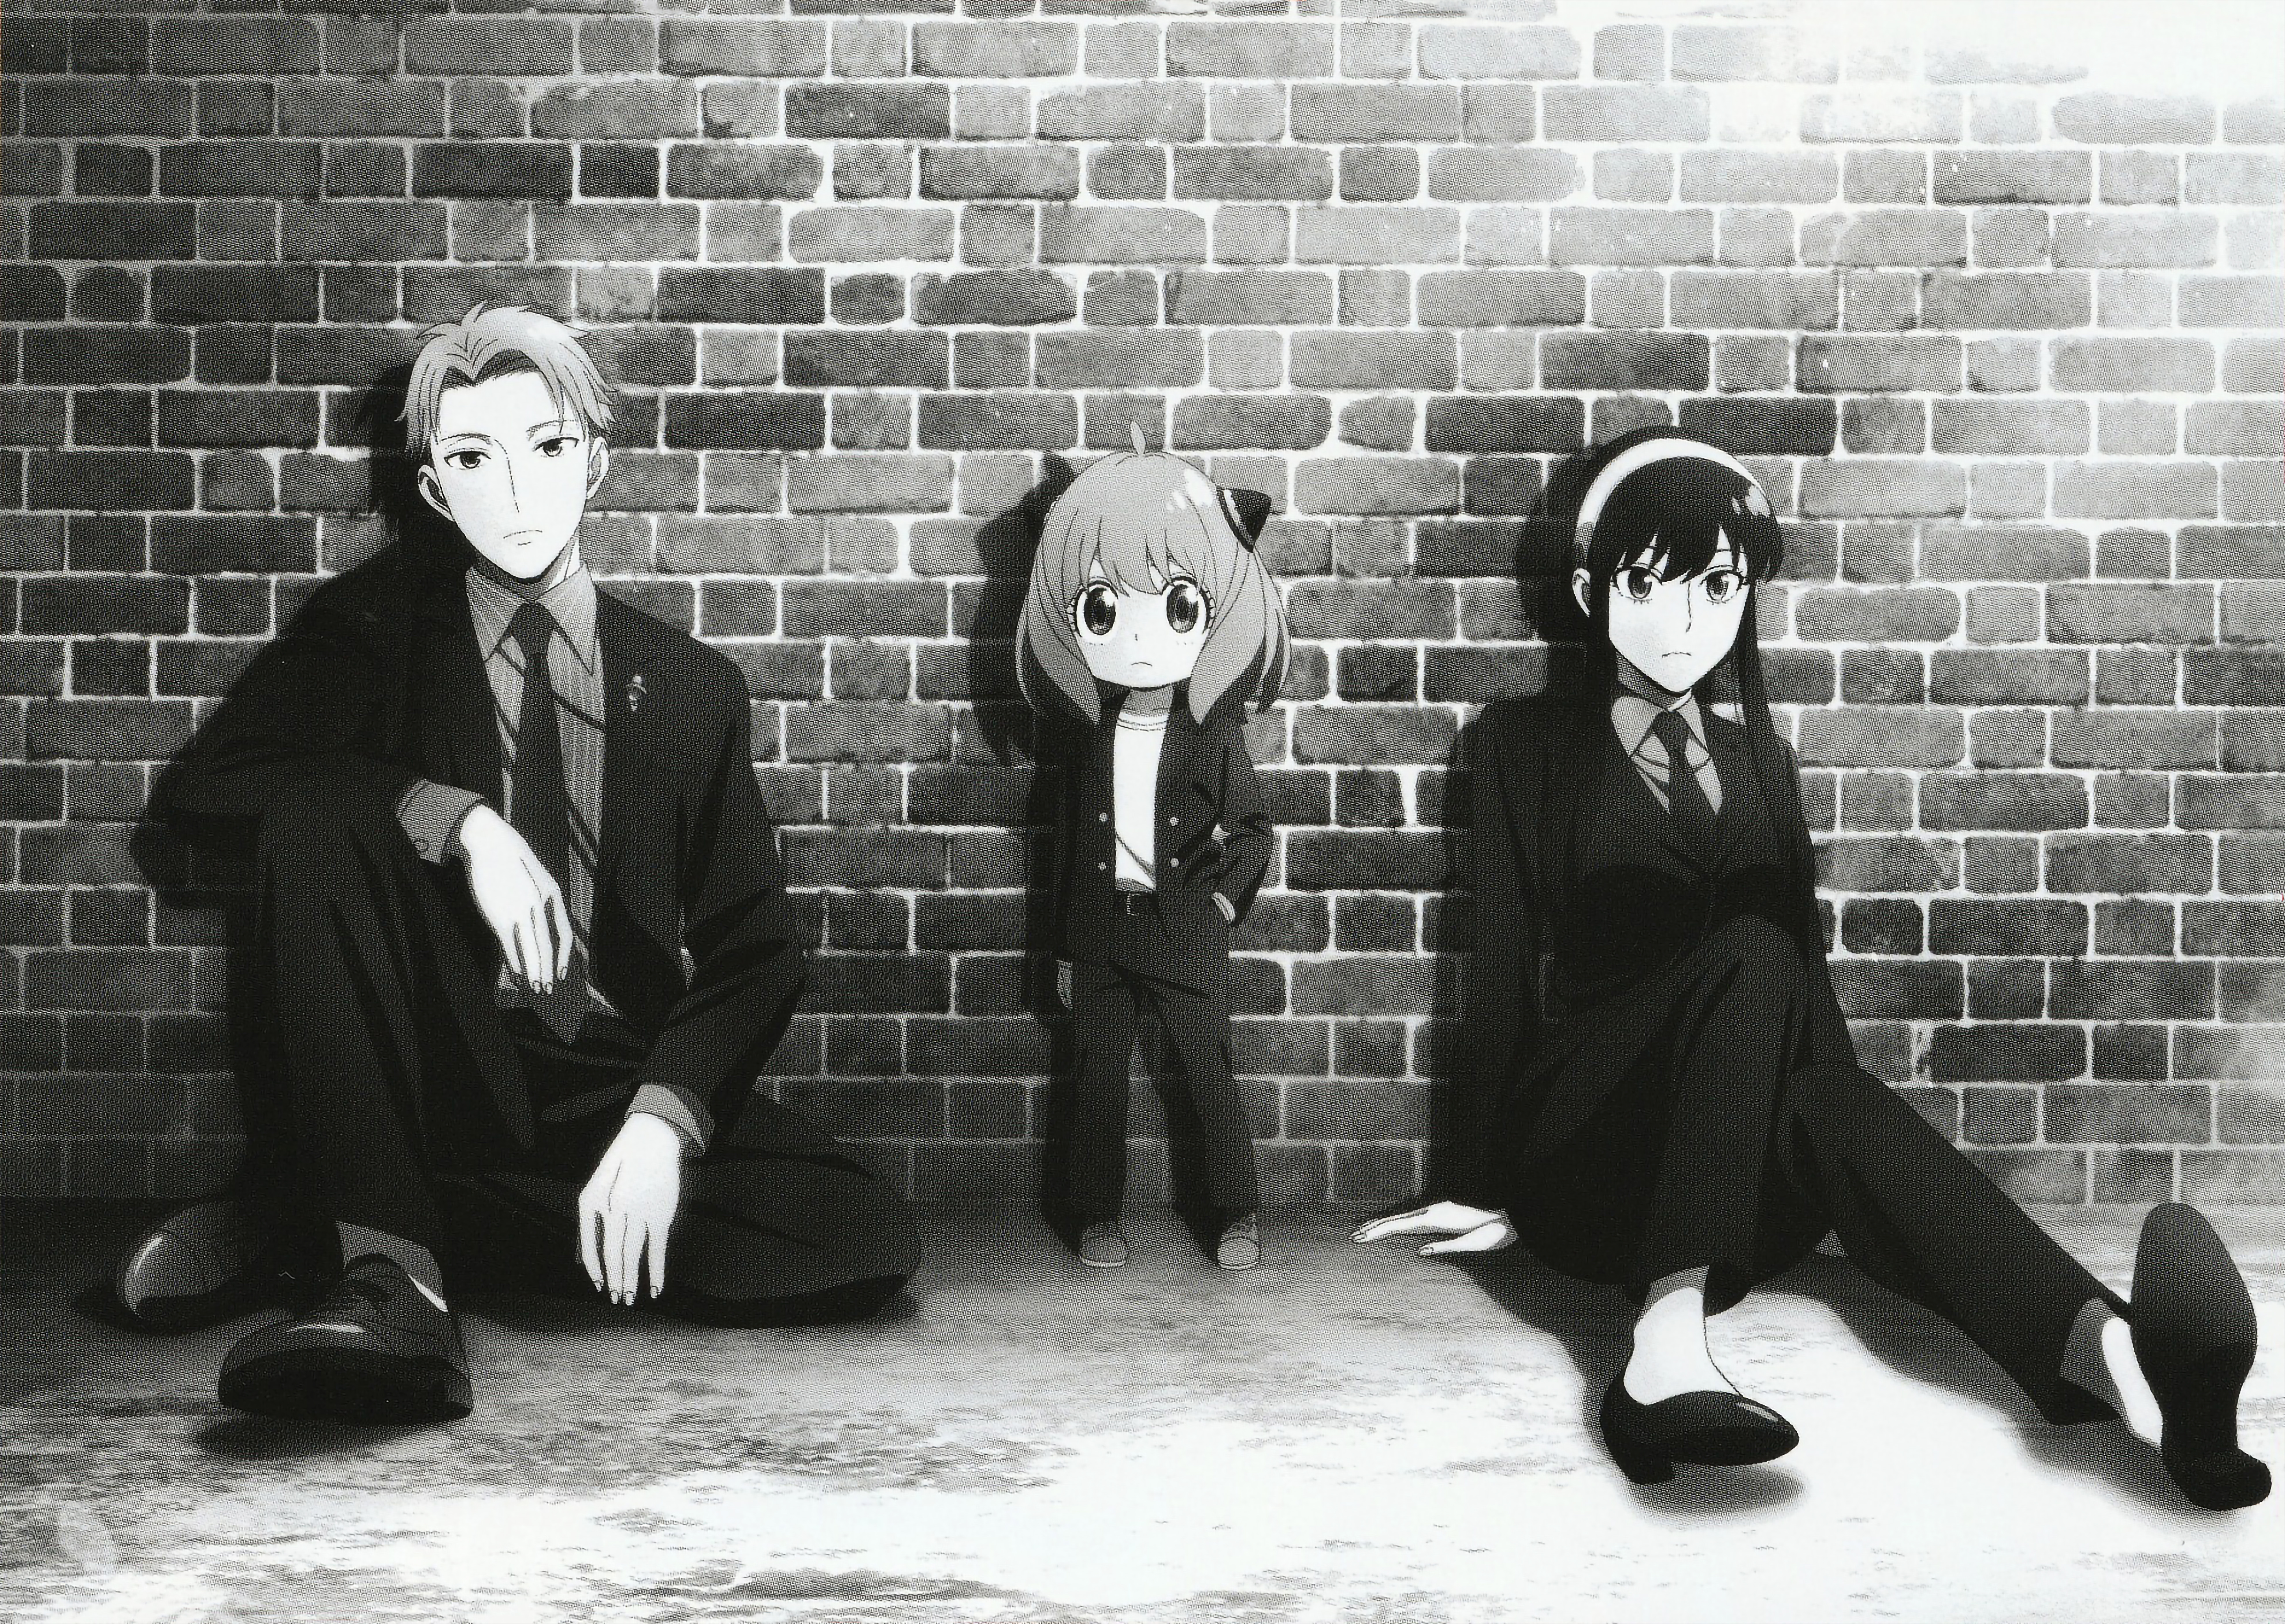 Anime Spy x Family HD Wallpaper by Lufi_Ays